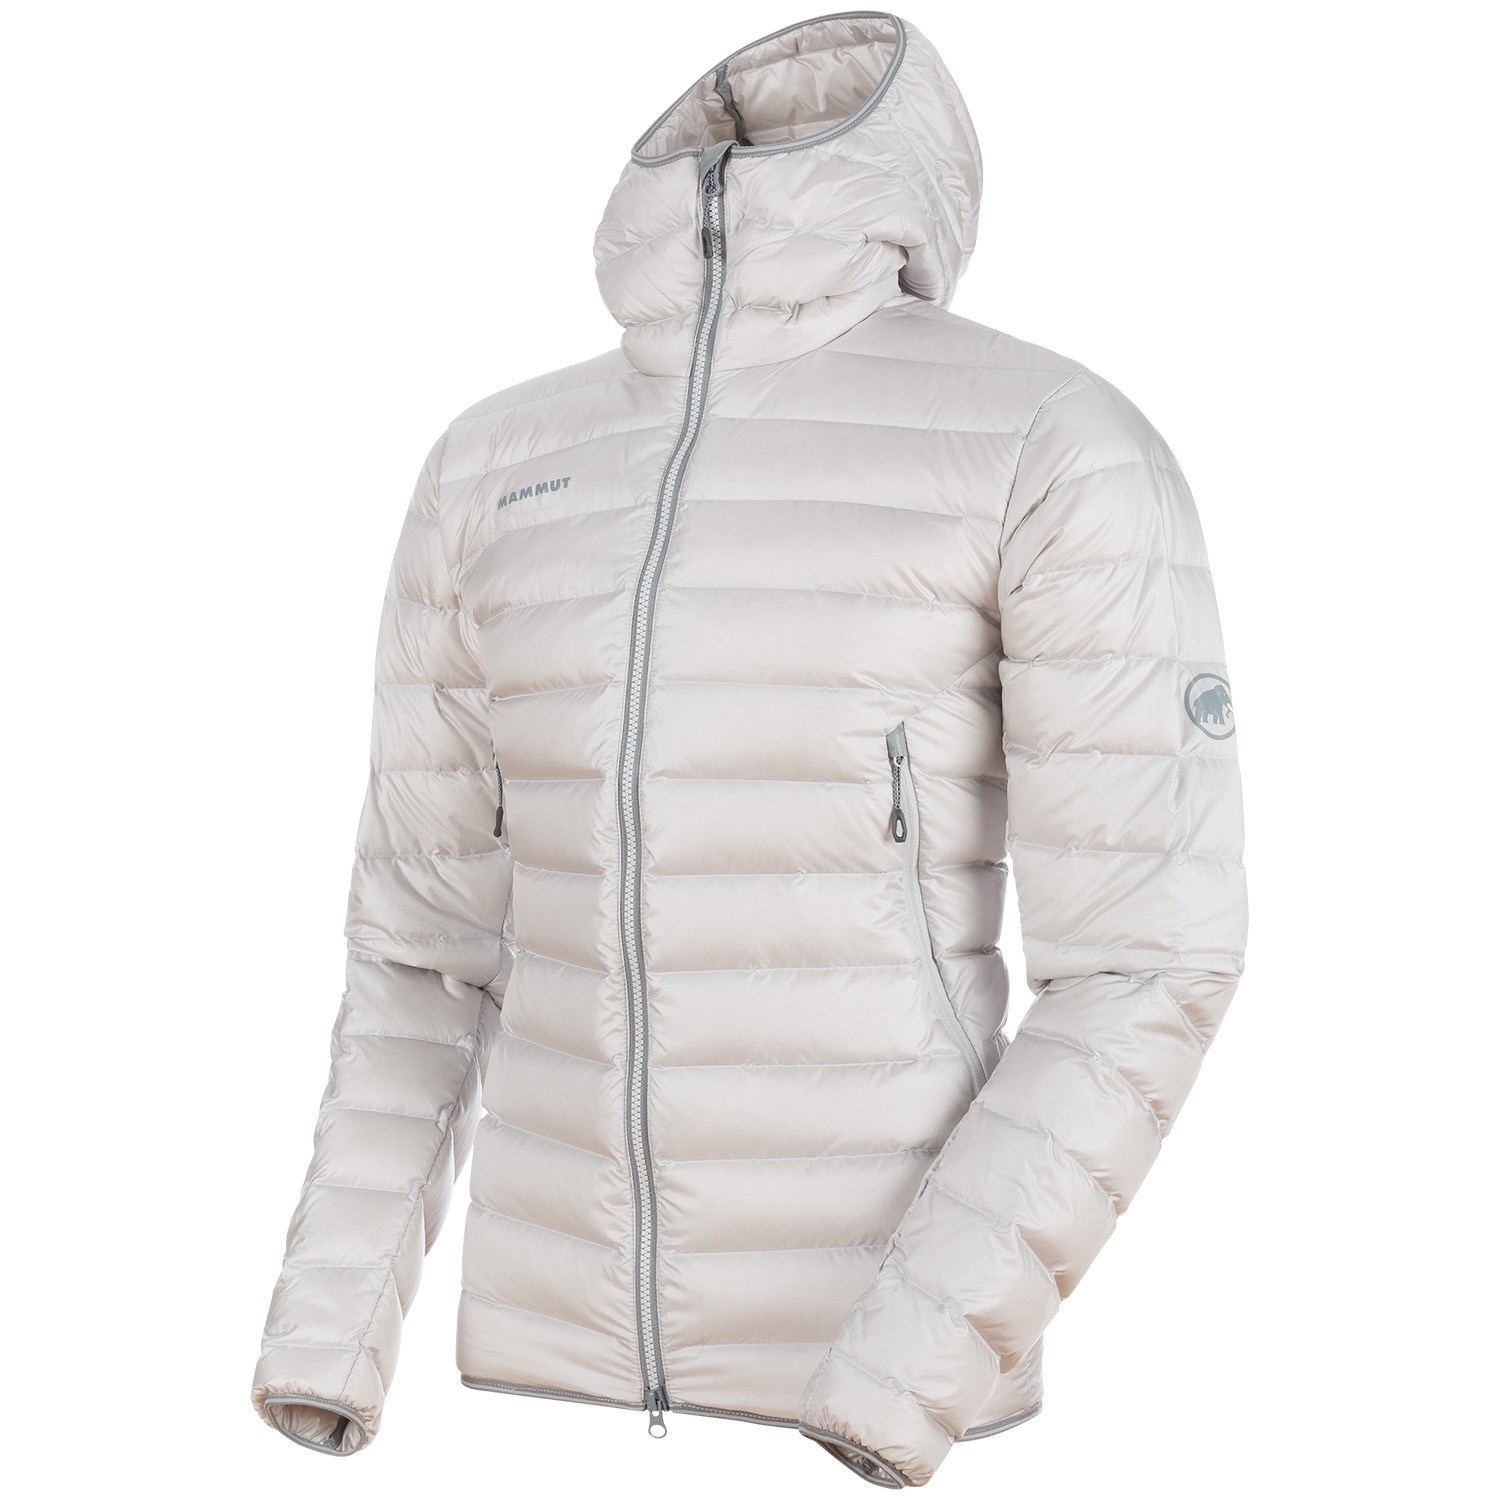 Buy broad peak in hooded jacket mammut cheap online